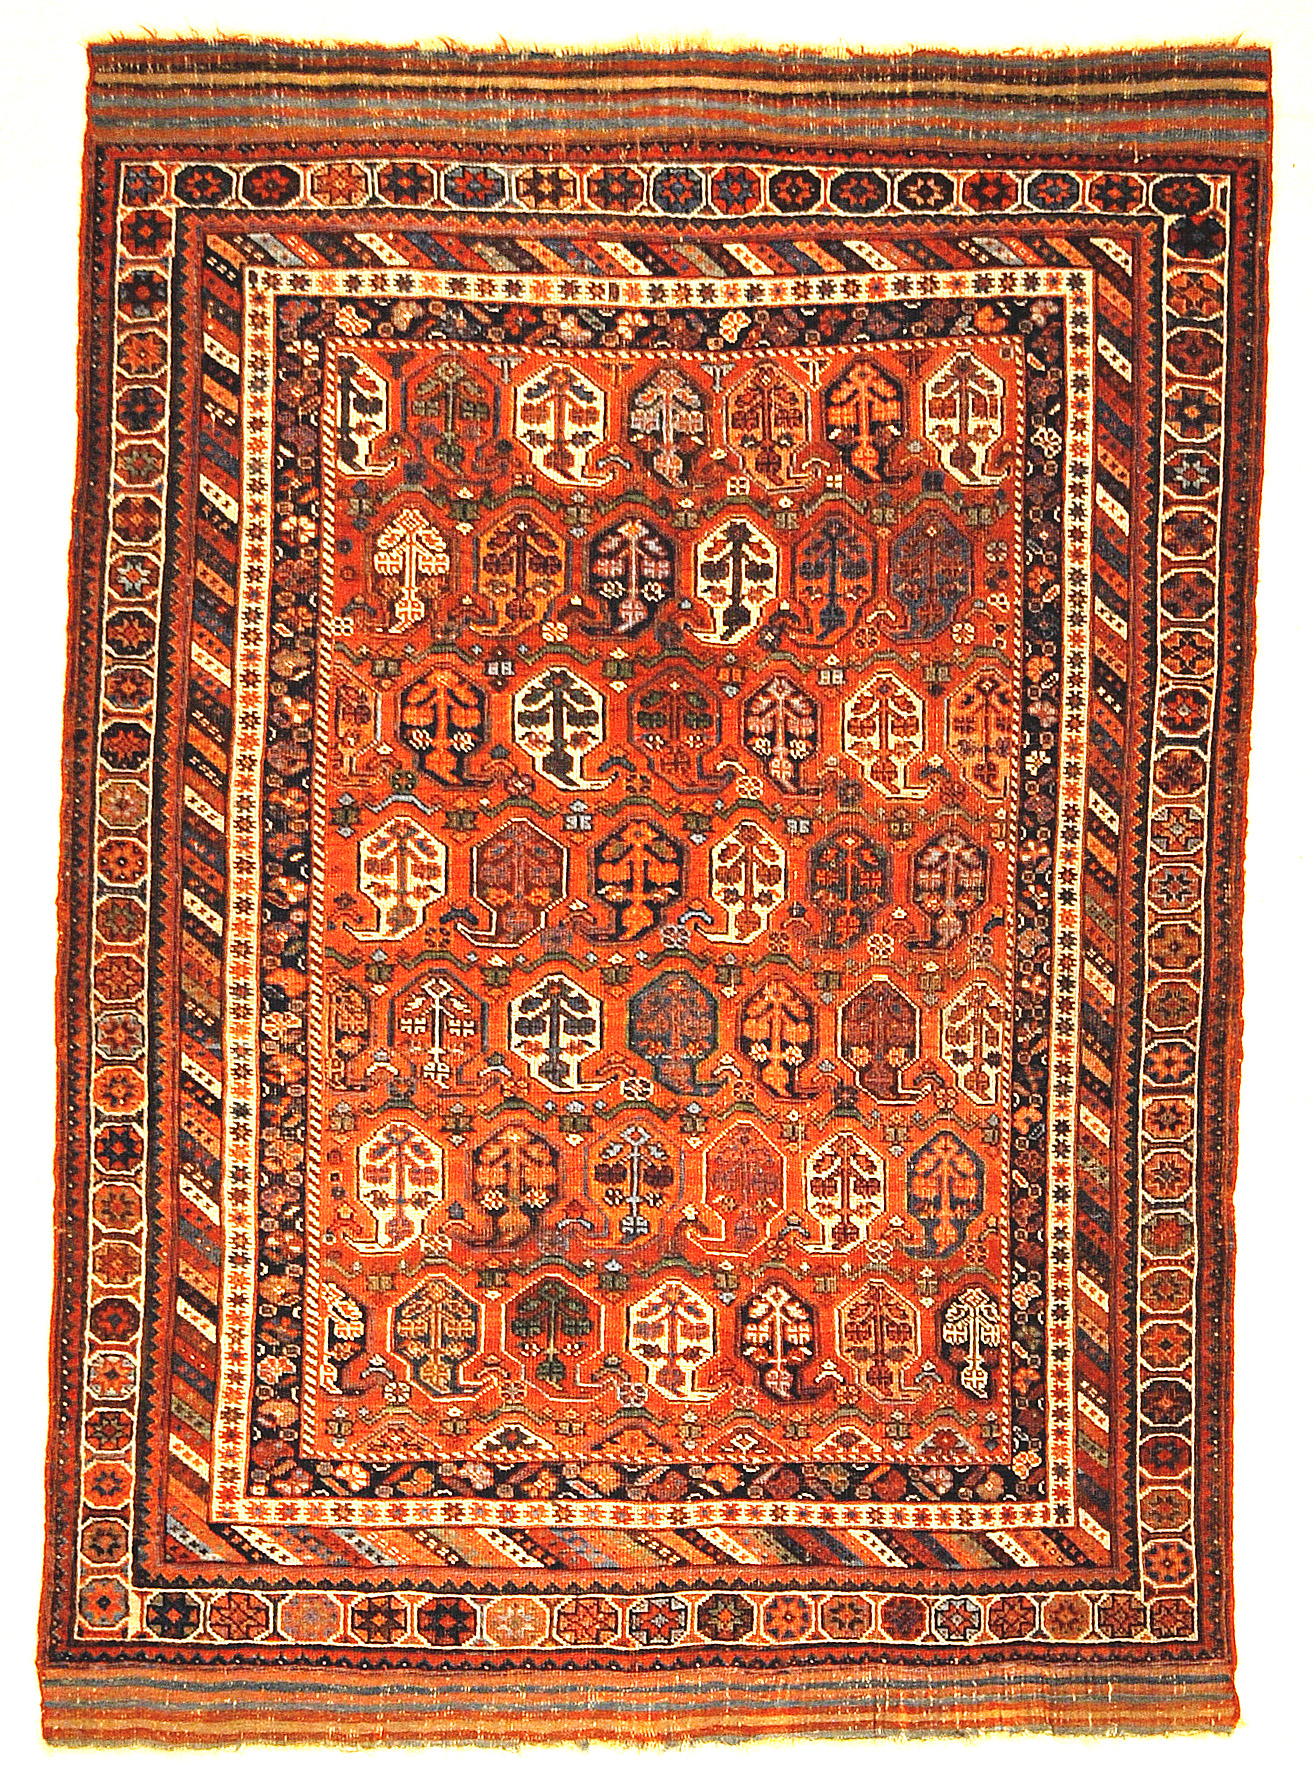 Antique Mid Century Persian Afshar Botteh Circa 1850 Genuine Authentic Woven Carpet Art Santa Barbara Design Center Rugs and More